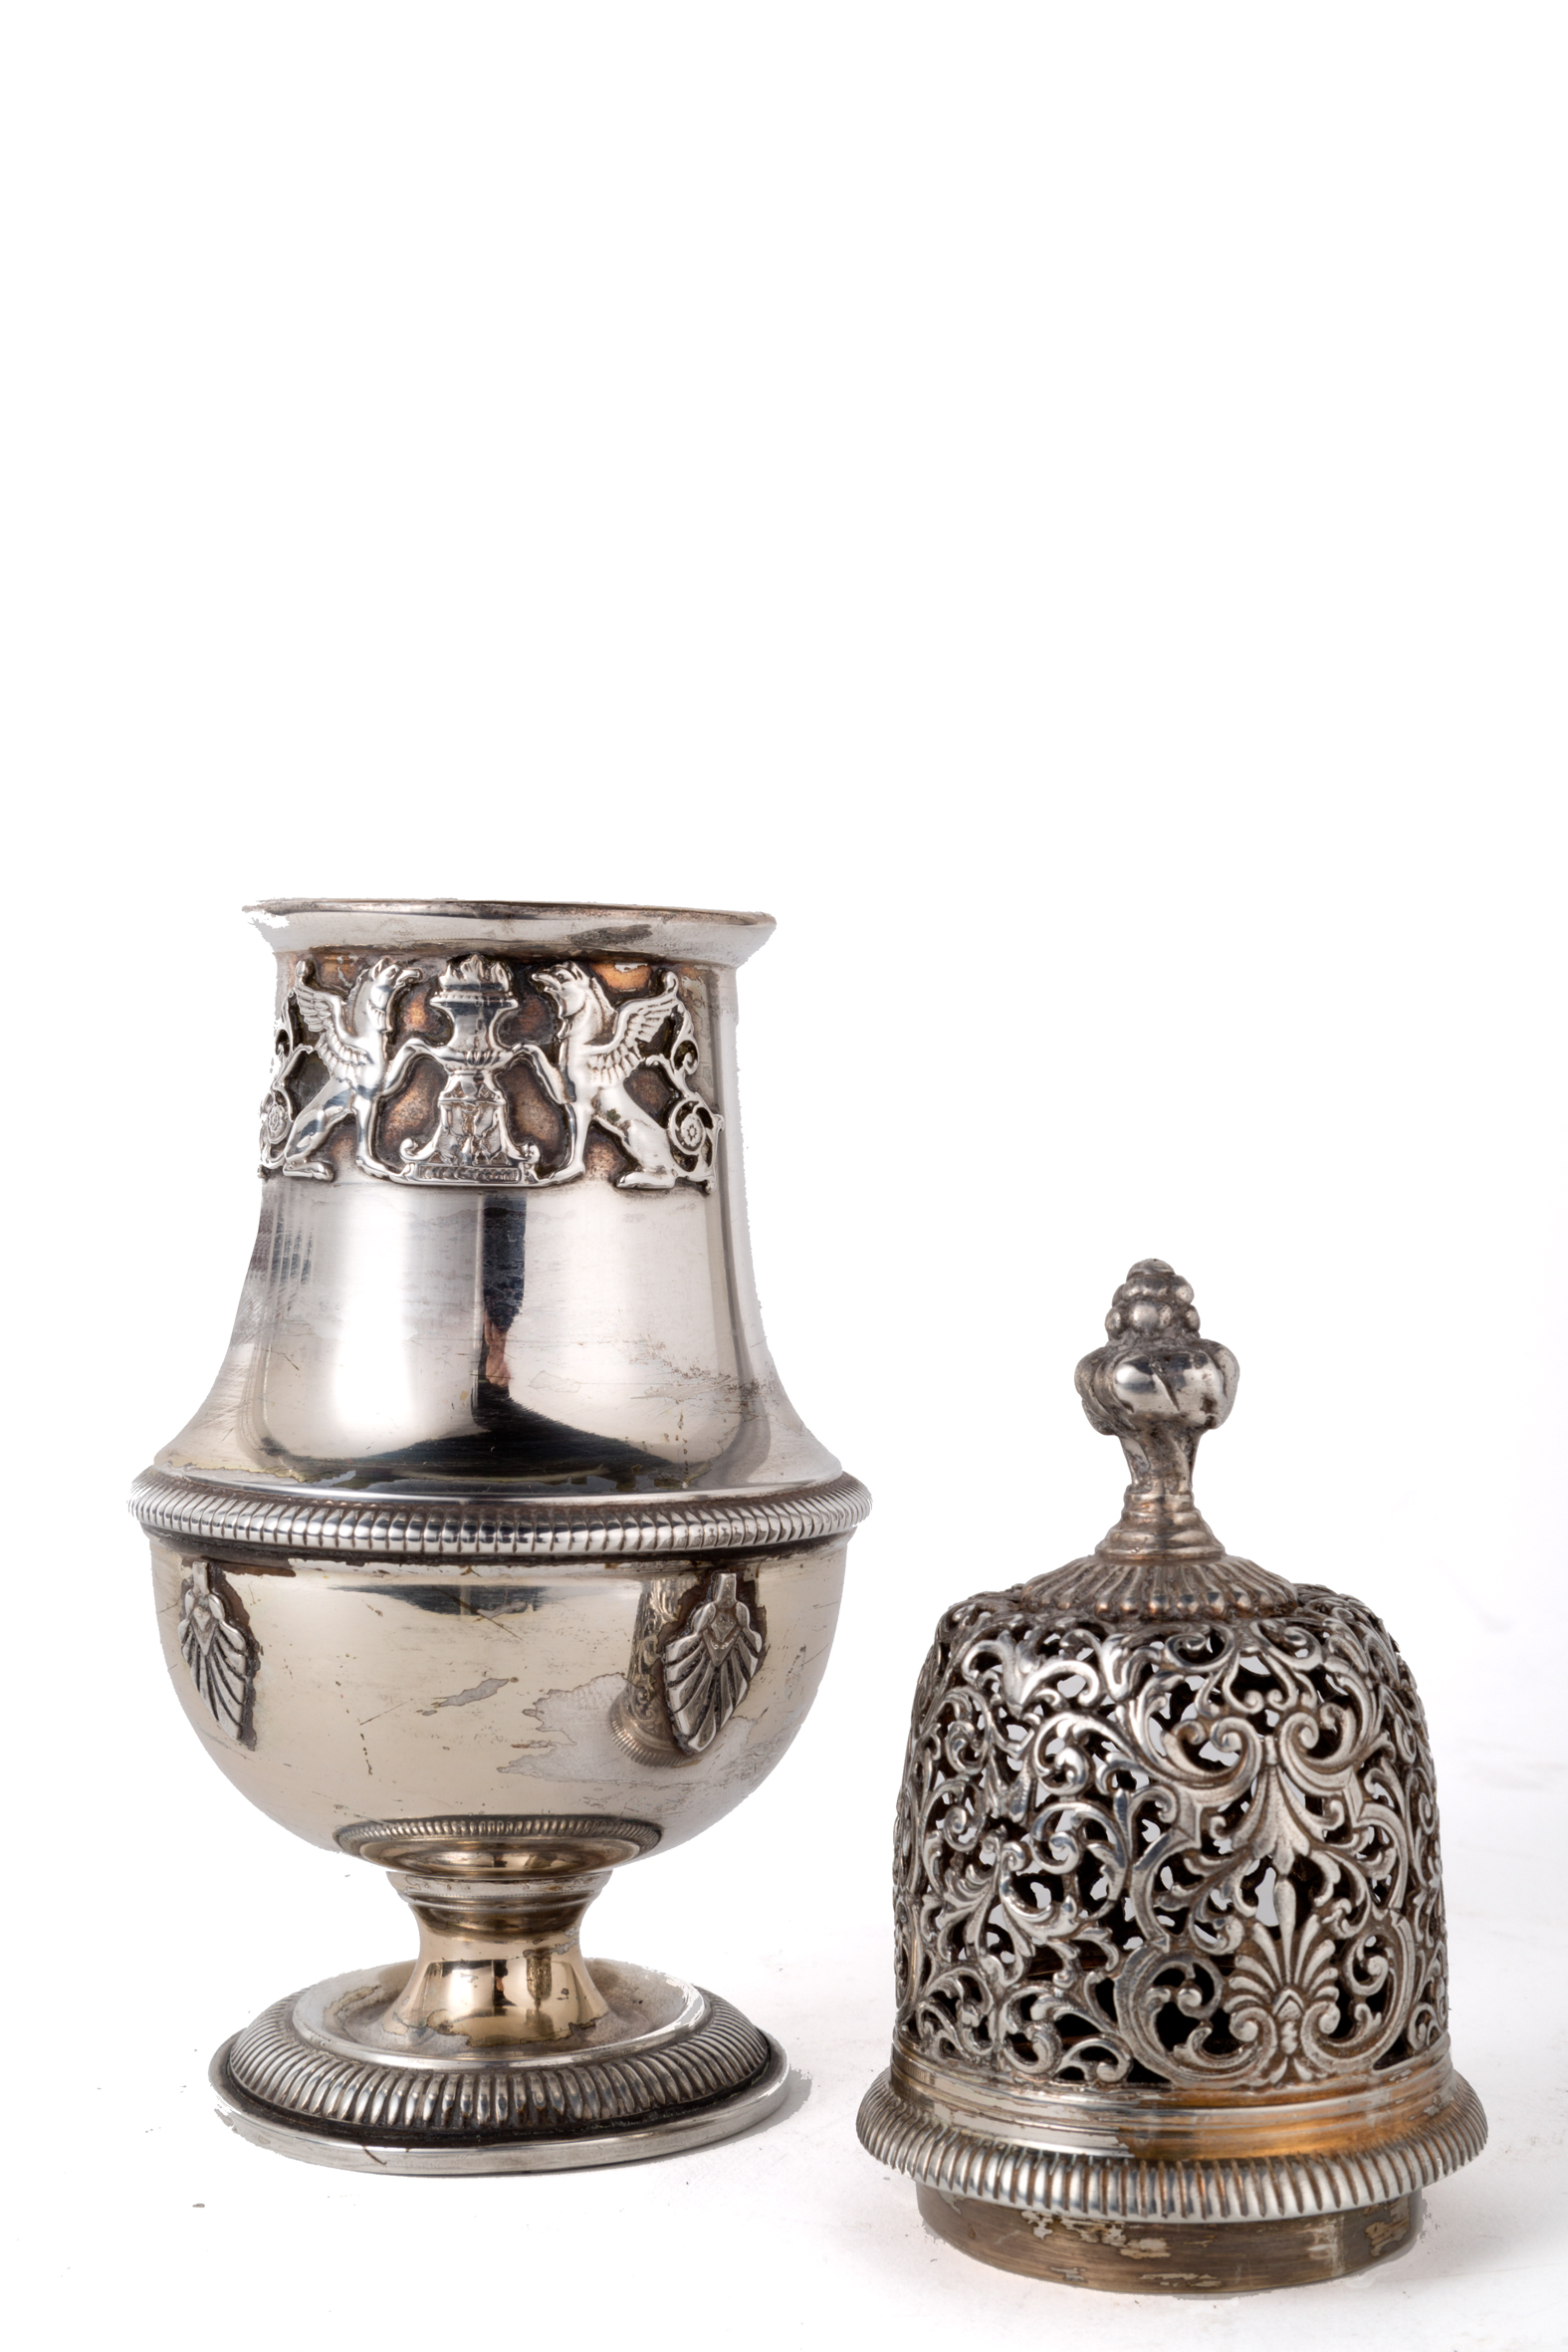 Silver incense burner, gr. 220 ca. 20th century - Image 2 of 3